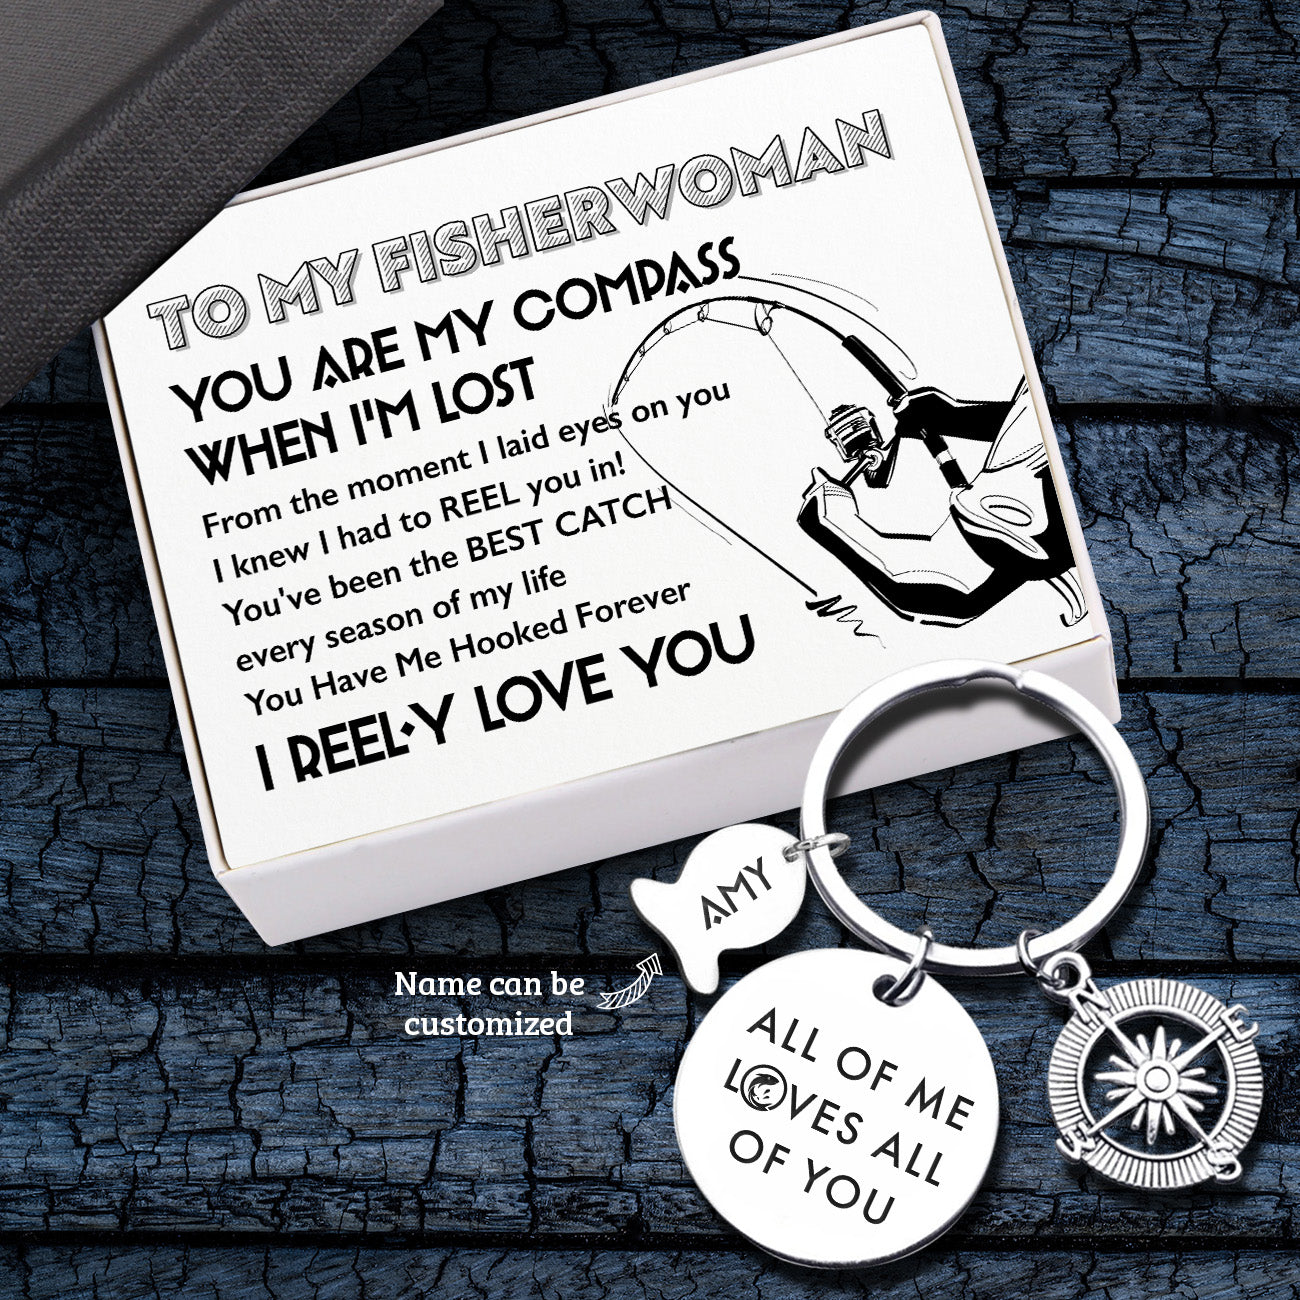 Personalised Fishing Compass Keychain - Fishing - To My Fisherwoman - I Reel-y Love You - Ukgkwb13004